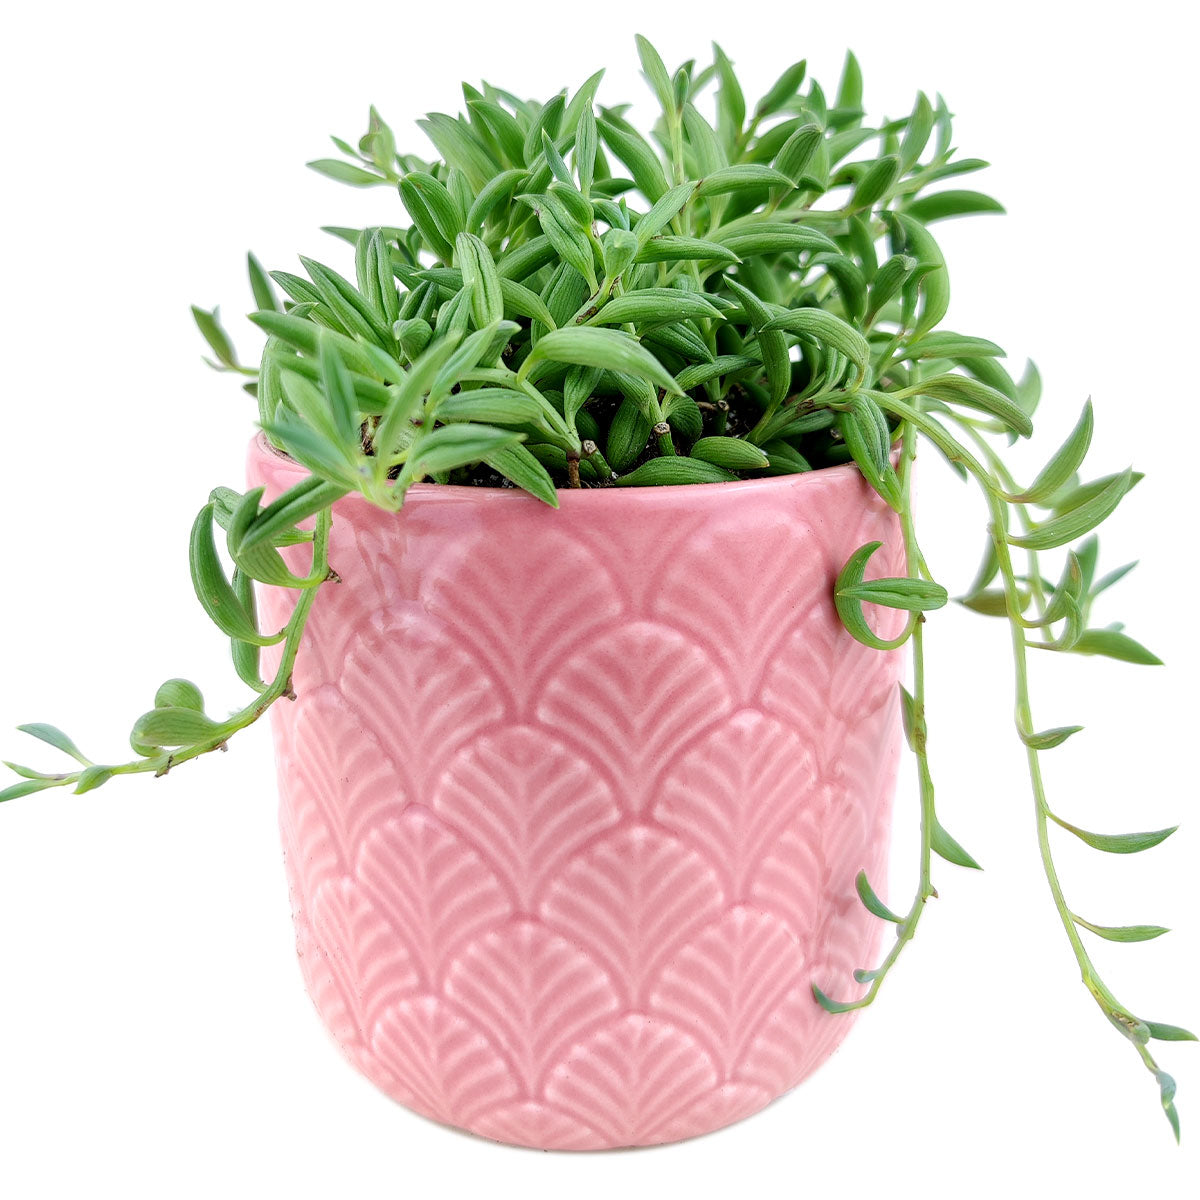 Pink Fan Pot for sale, ceramic vase for home decor, ceramic succulent and cactus pots for sale, Succulent gift ideas